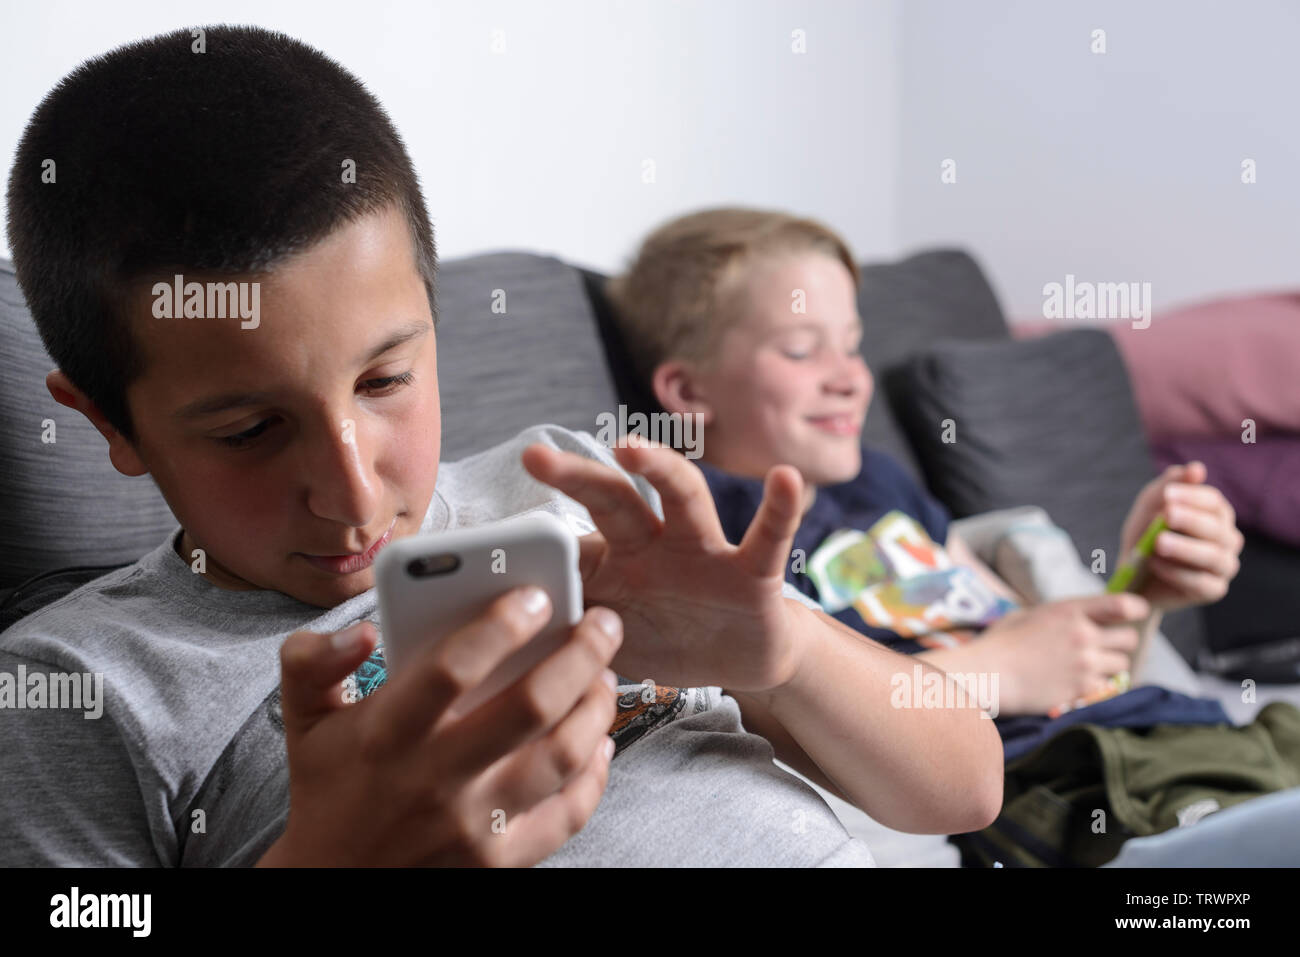 Schoolmates-Boys watching online videos on  their mobile phones Stock Photo